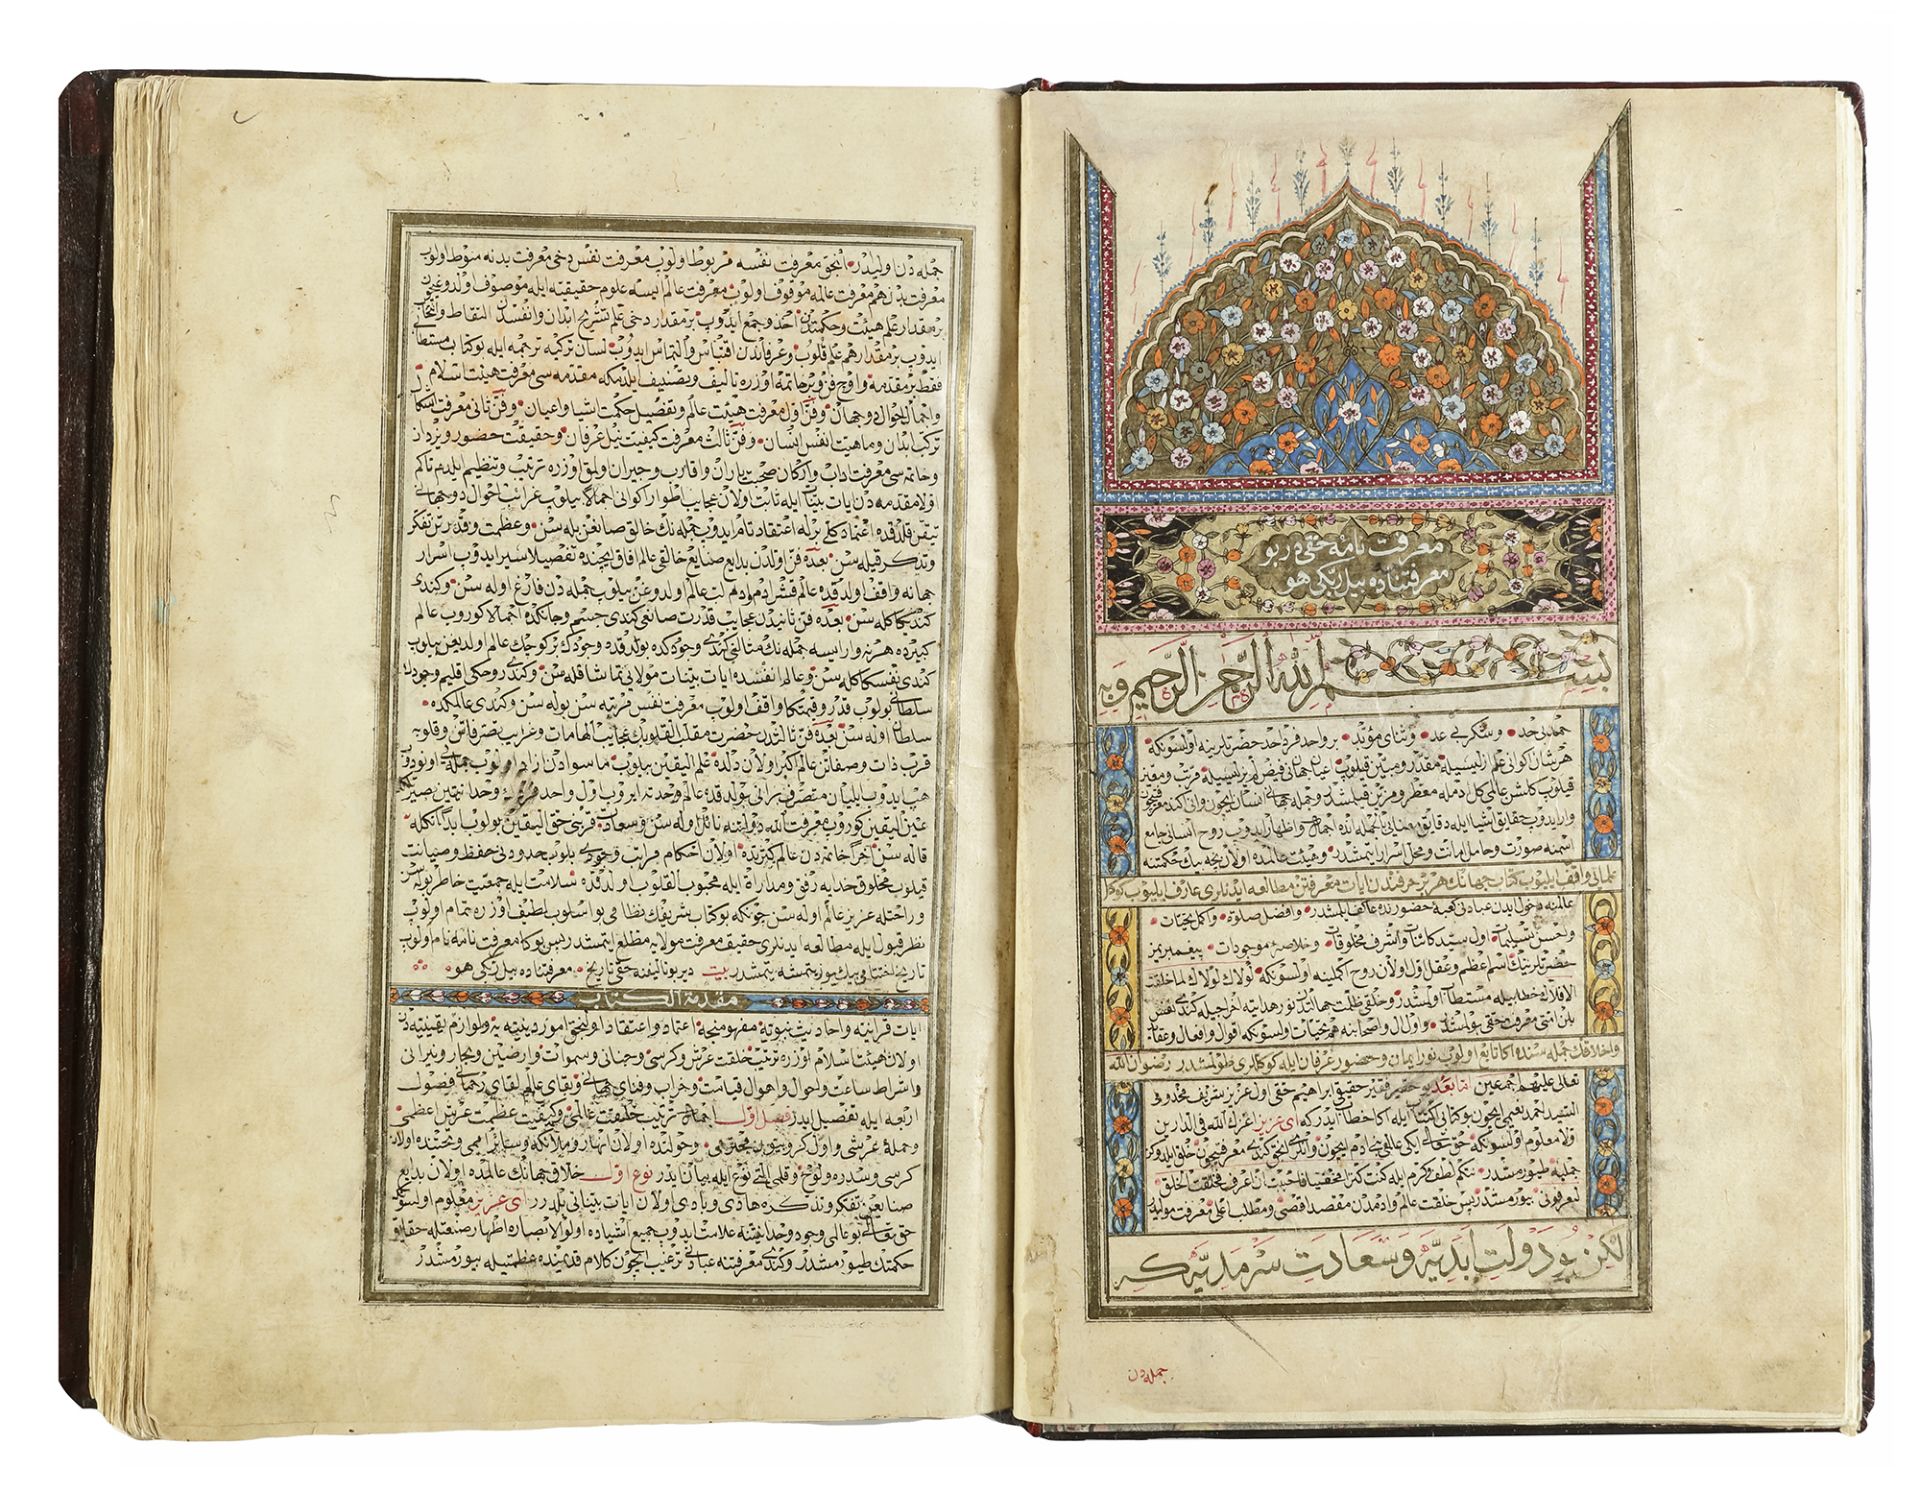 MARIFETNAME, IBRAHIM HAKKI, COPIED BY SAE'D ALLAH BIN ALI BIN AHMED, TURKEY, 1221 AH/1806 AD - Image 4 of 58